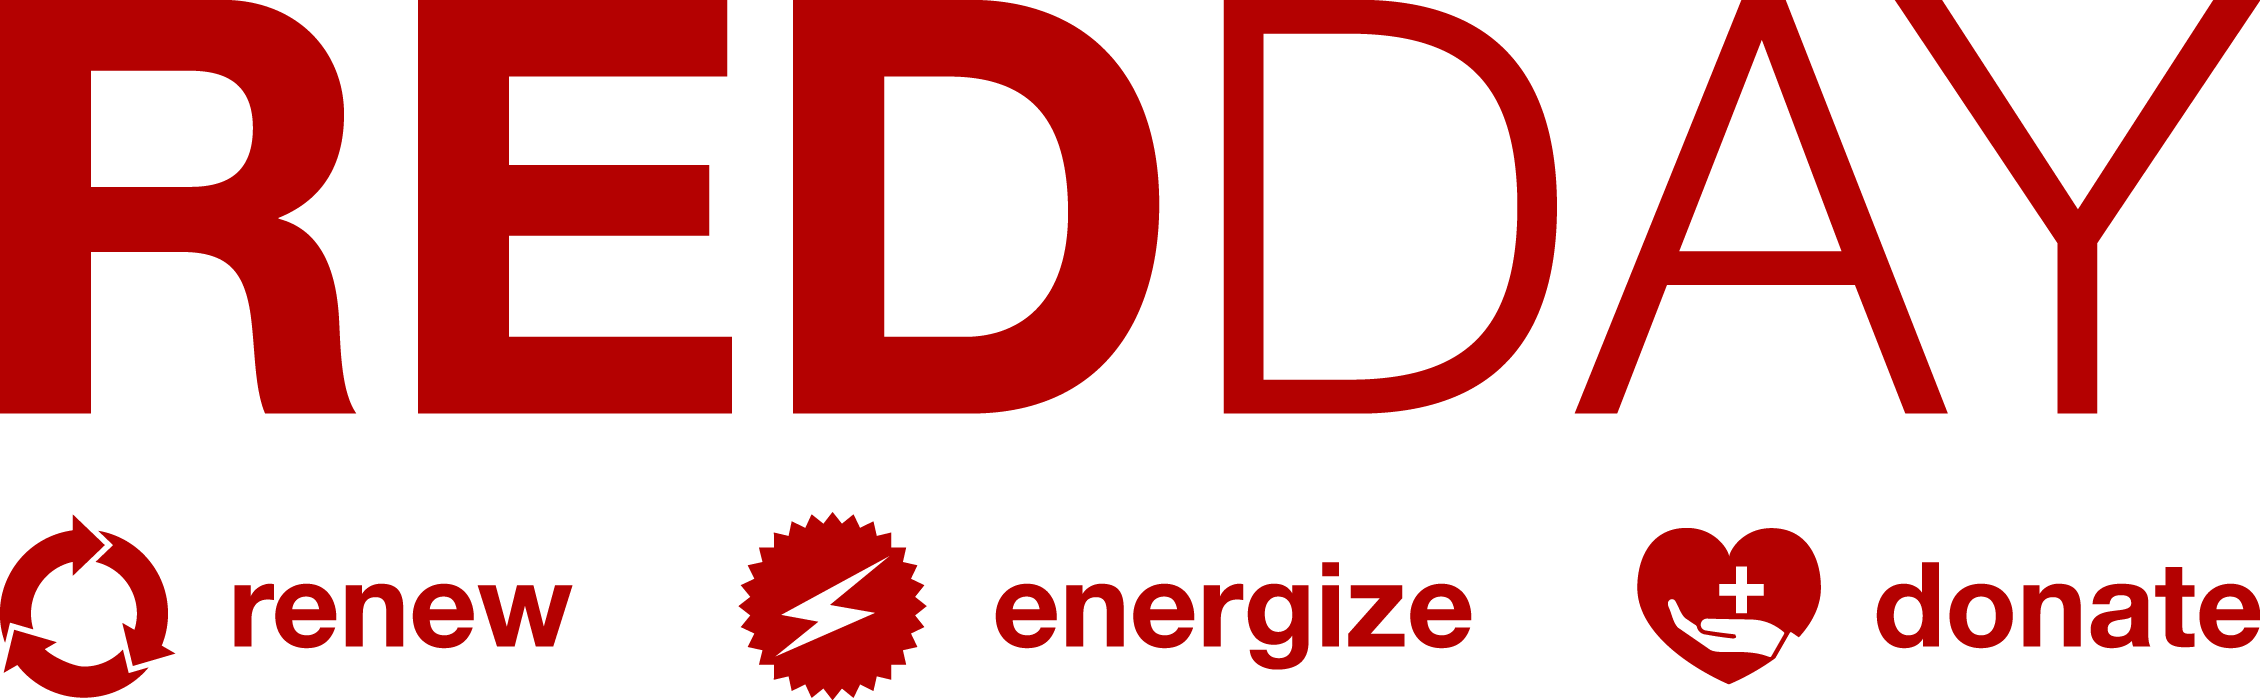 Keller Williams Logo - Renew, Energize, and Donate